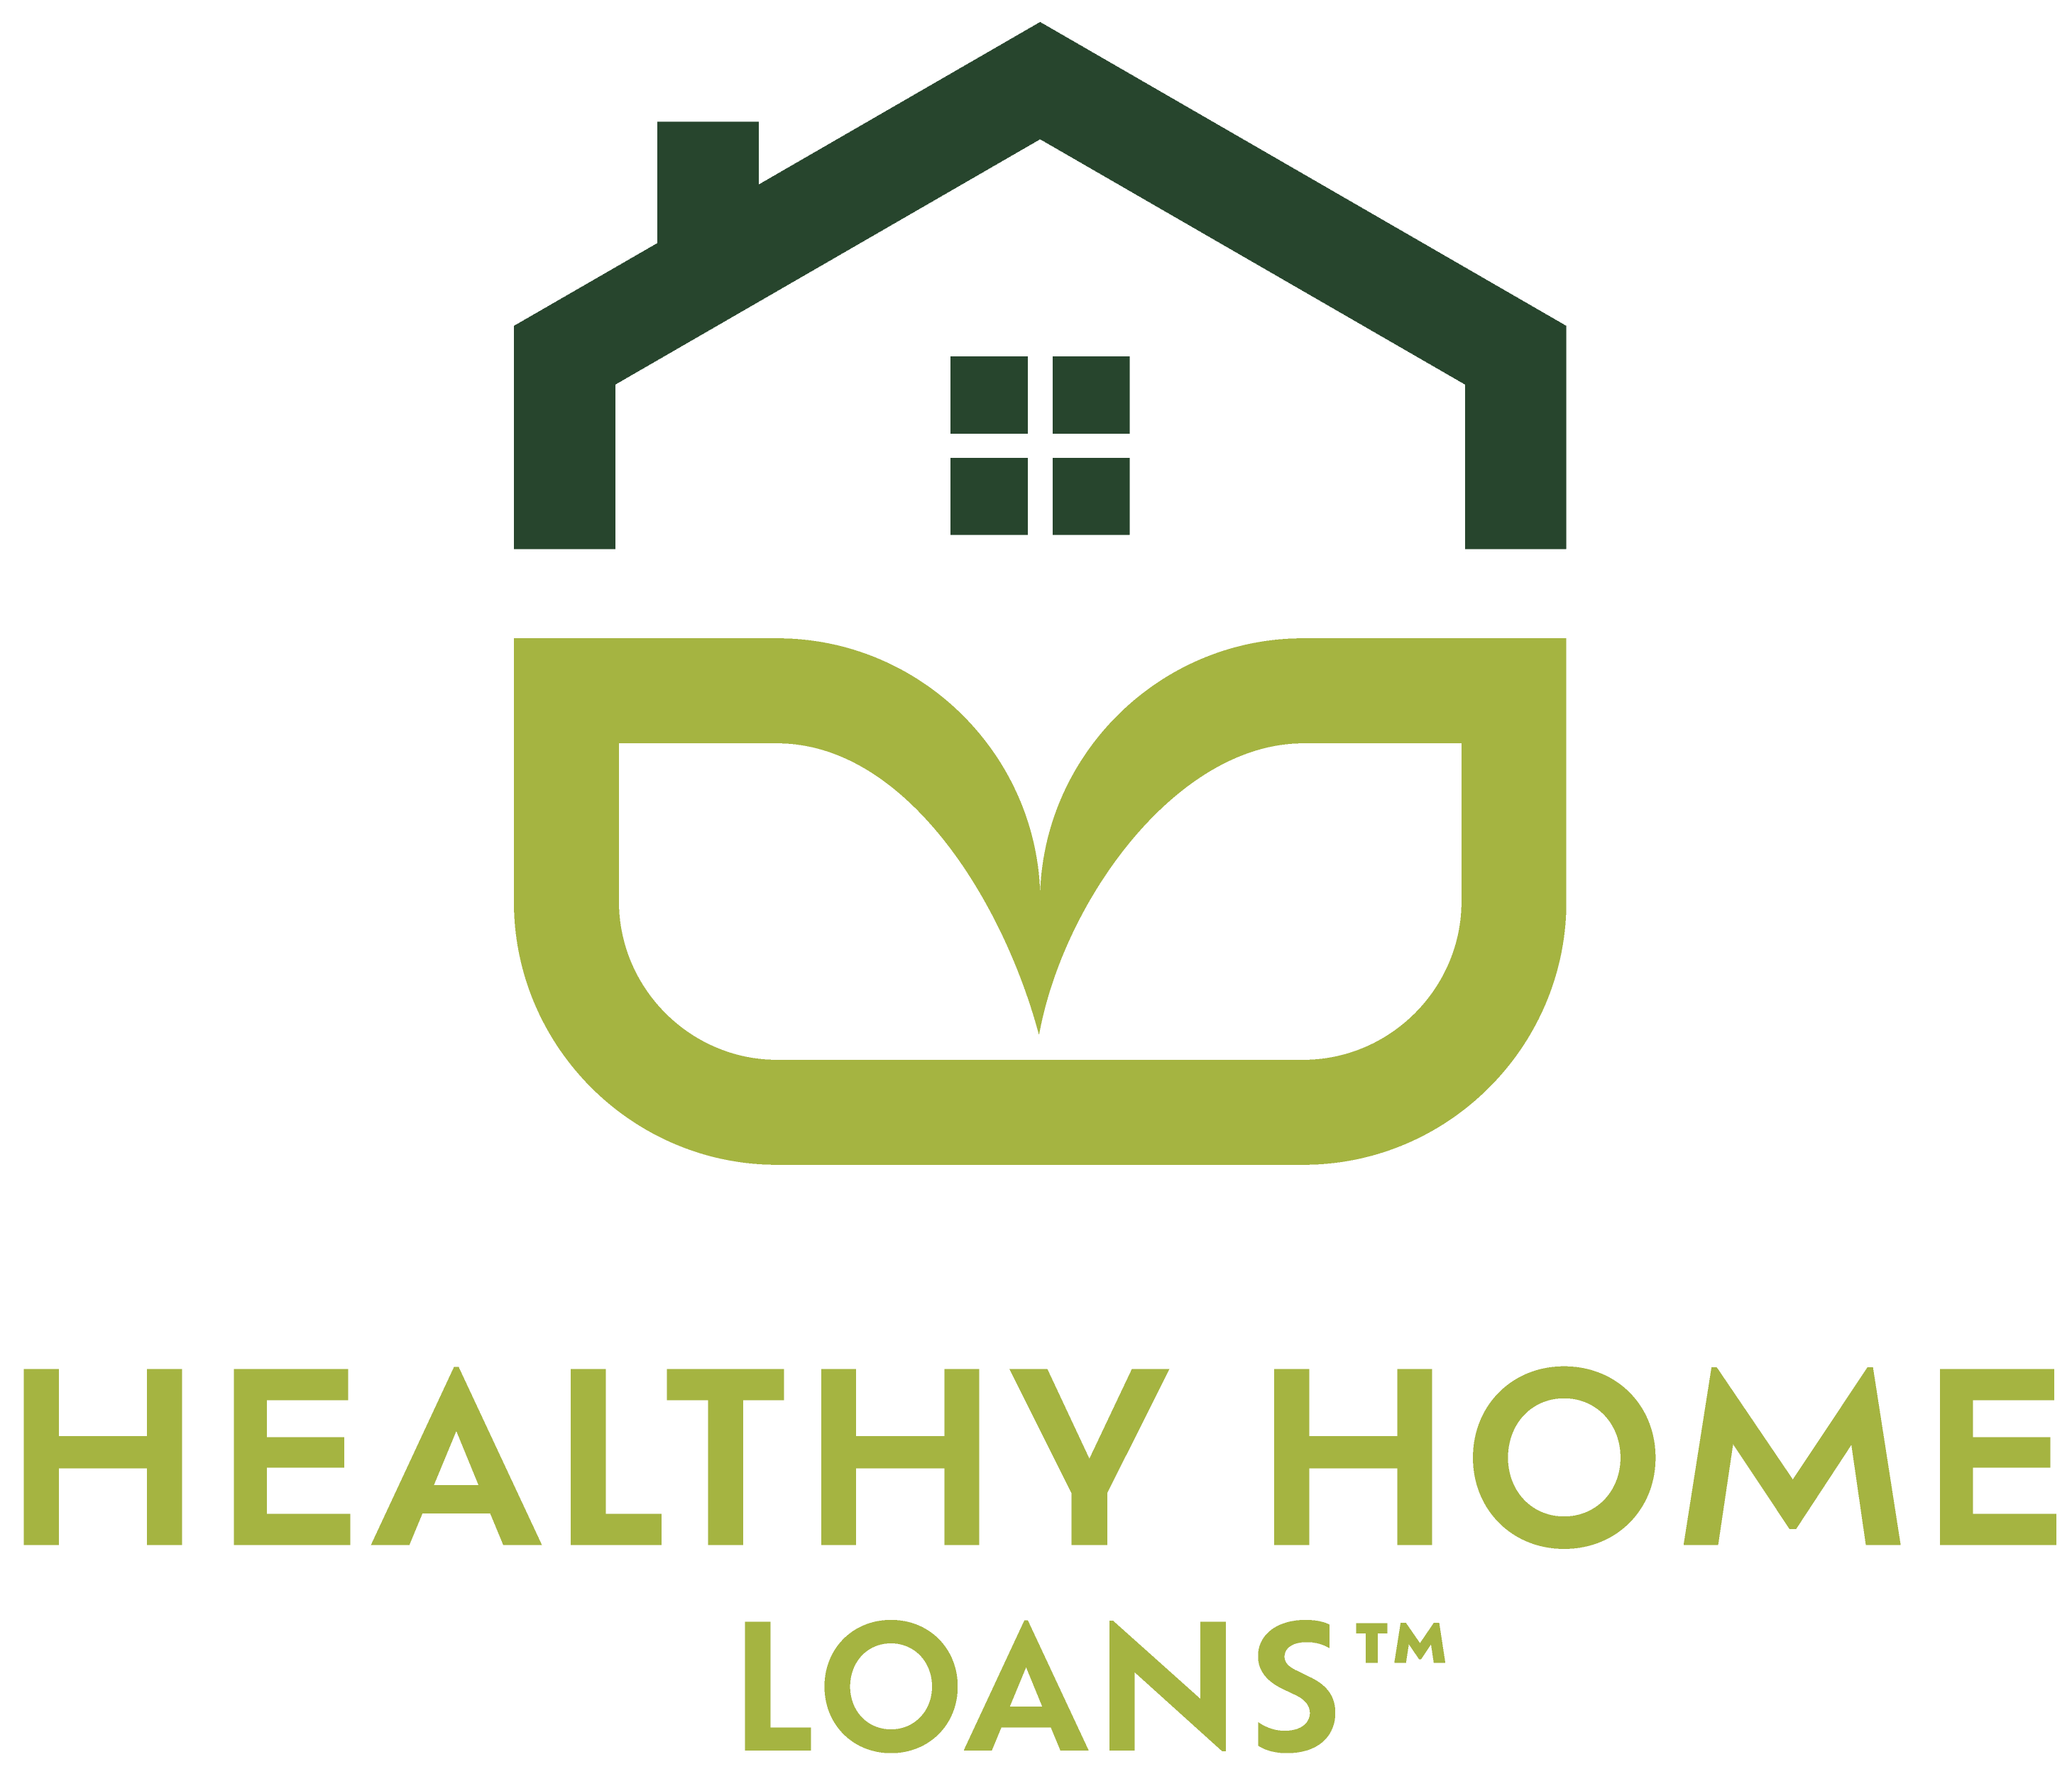 Healthy Home Loans (TM)